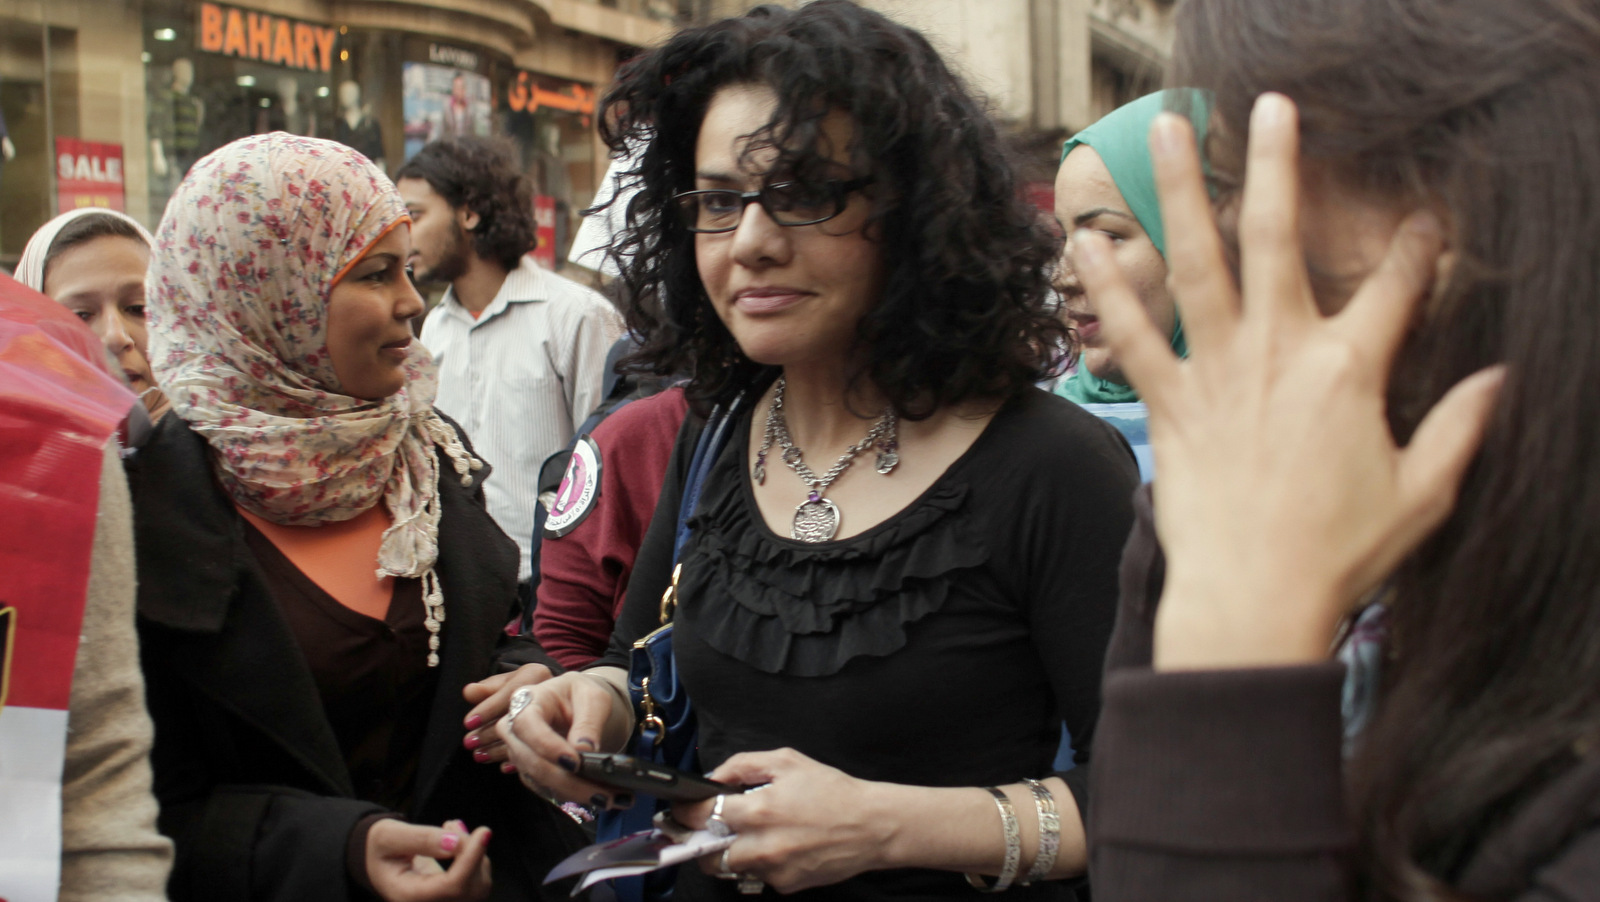 Egyptian activist Samira Ibrahim, left, and Mona Eltahawy, a prominent Egyptian-born U.S. columnist, center, march in downtown Cairo, Egypt to mark International Women's Day Thursday, March 8, 2012. (AP/Maya Alleruzzo)